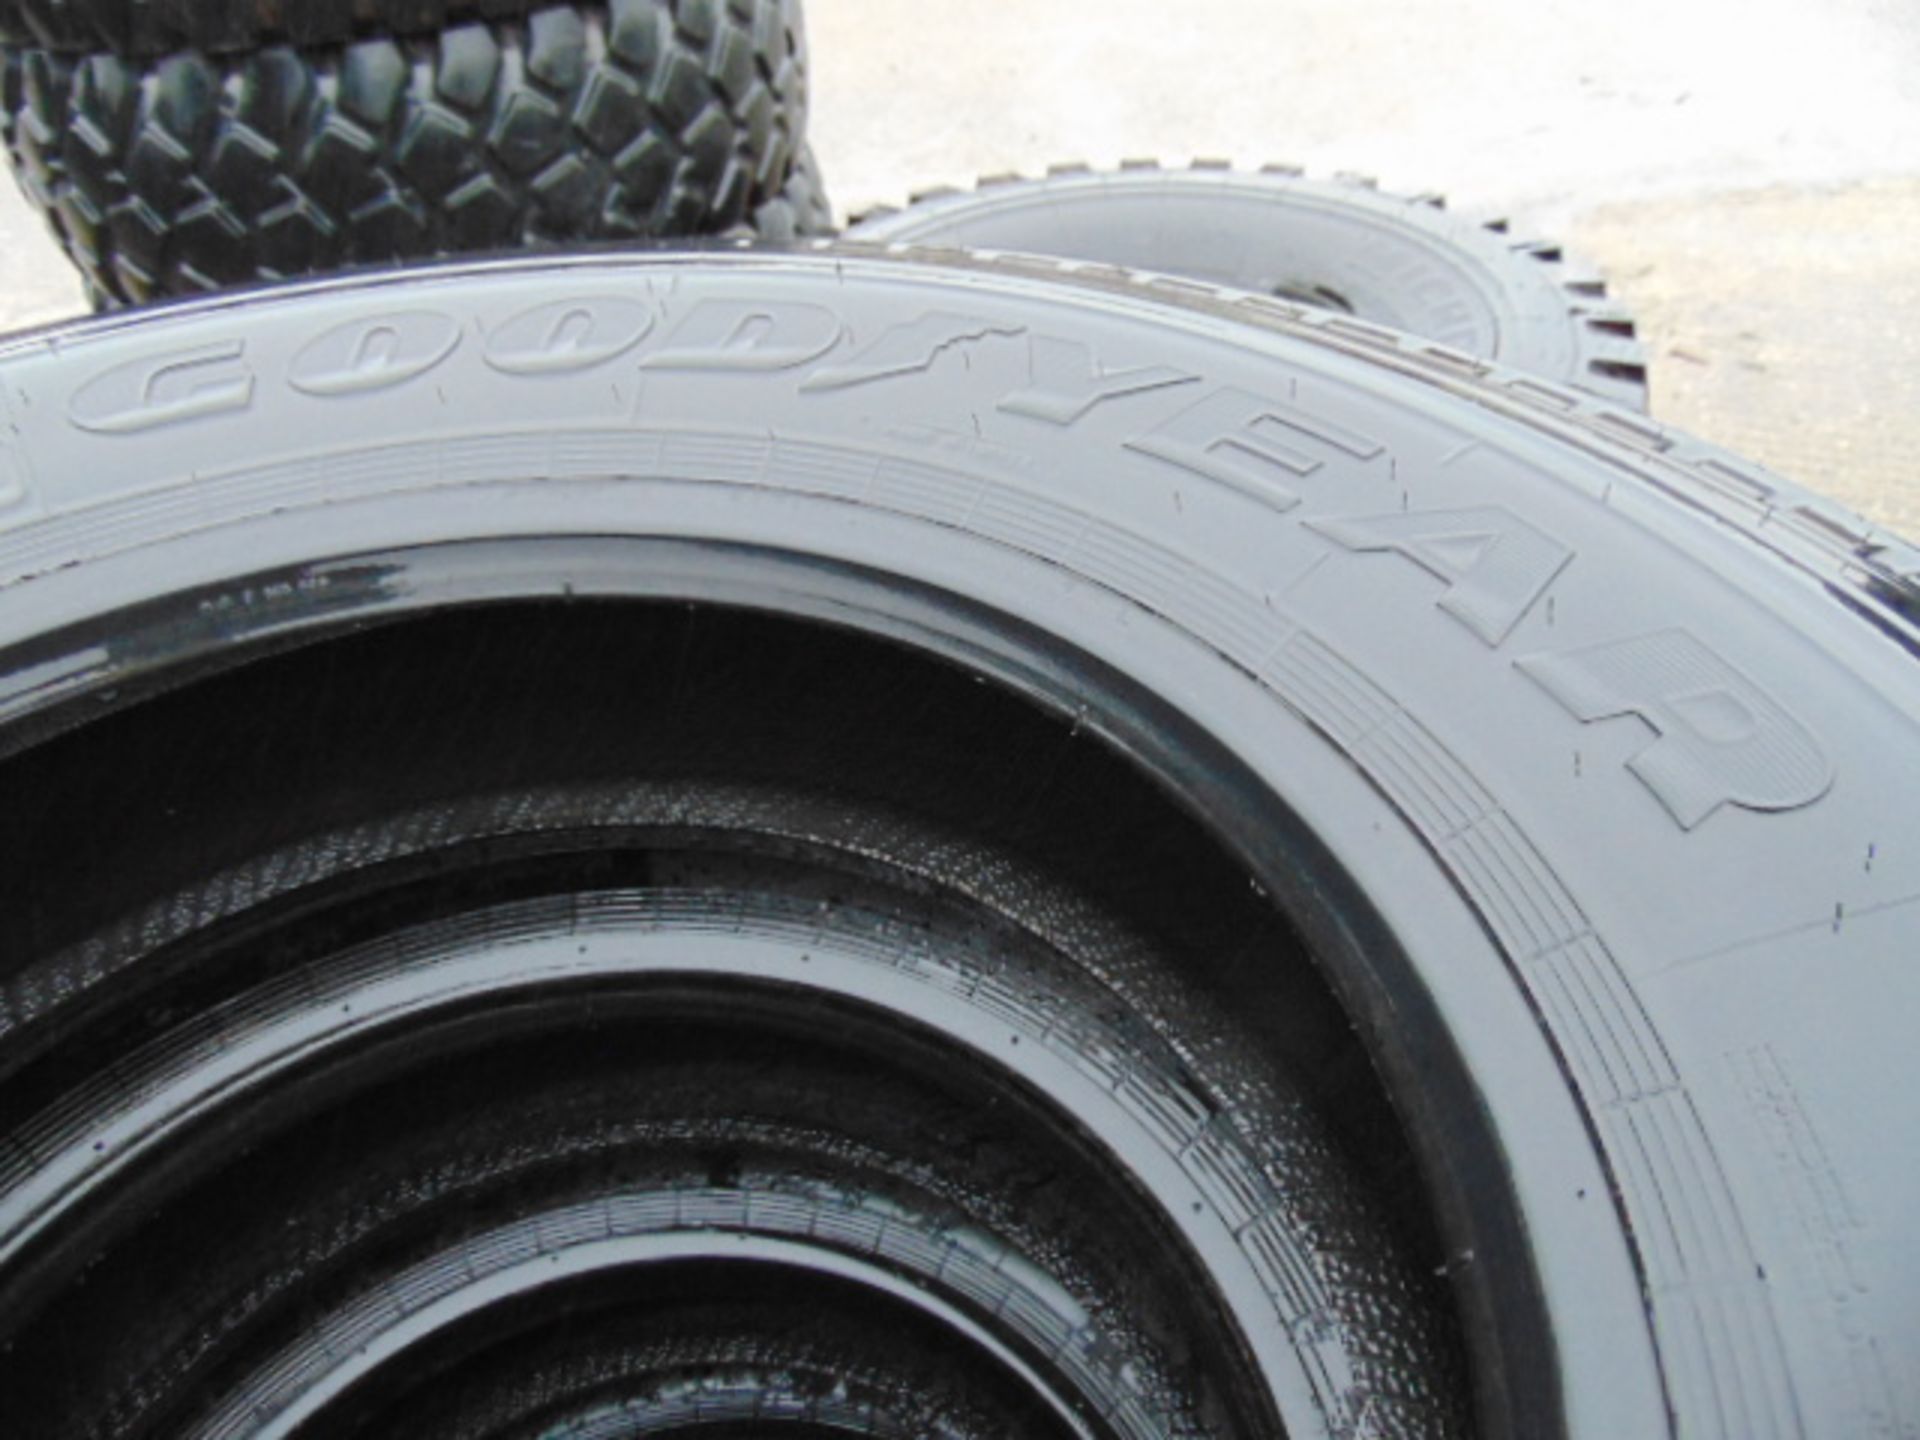 4 x 11R 22.5 Goodyear Marathon LHT Tyres Unused - Image 5 of 7